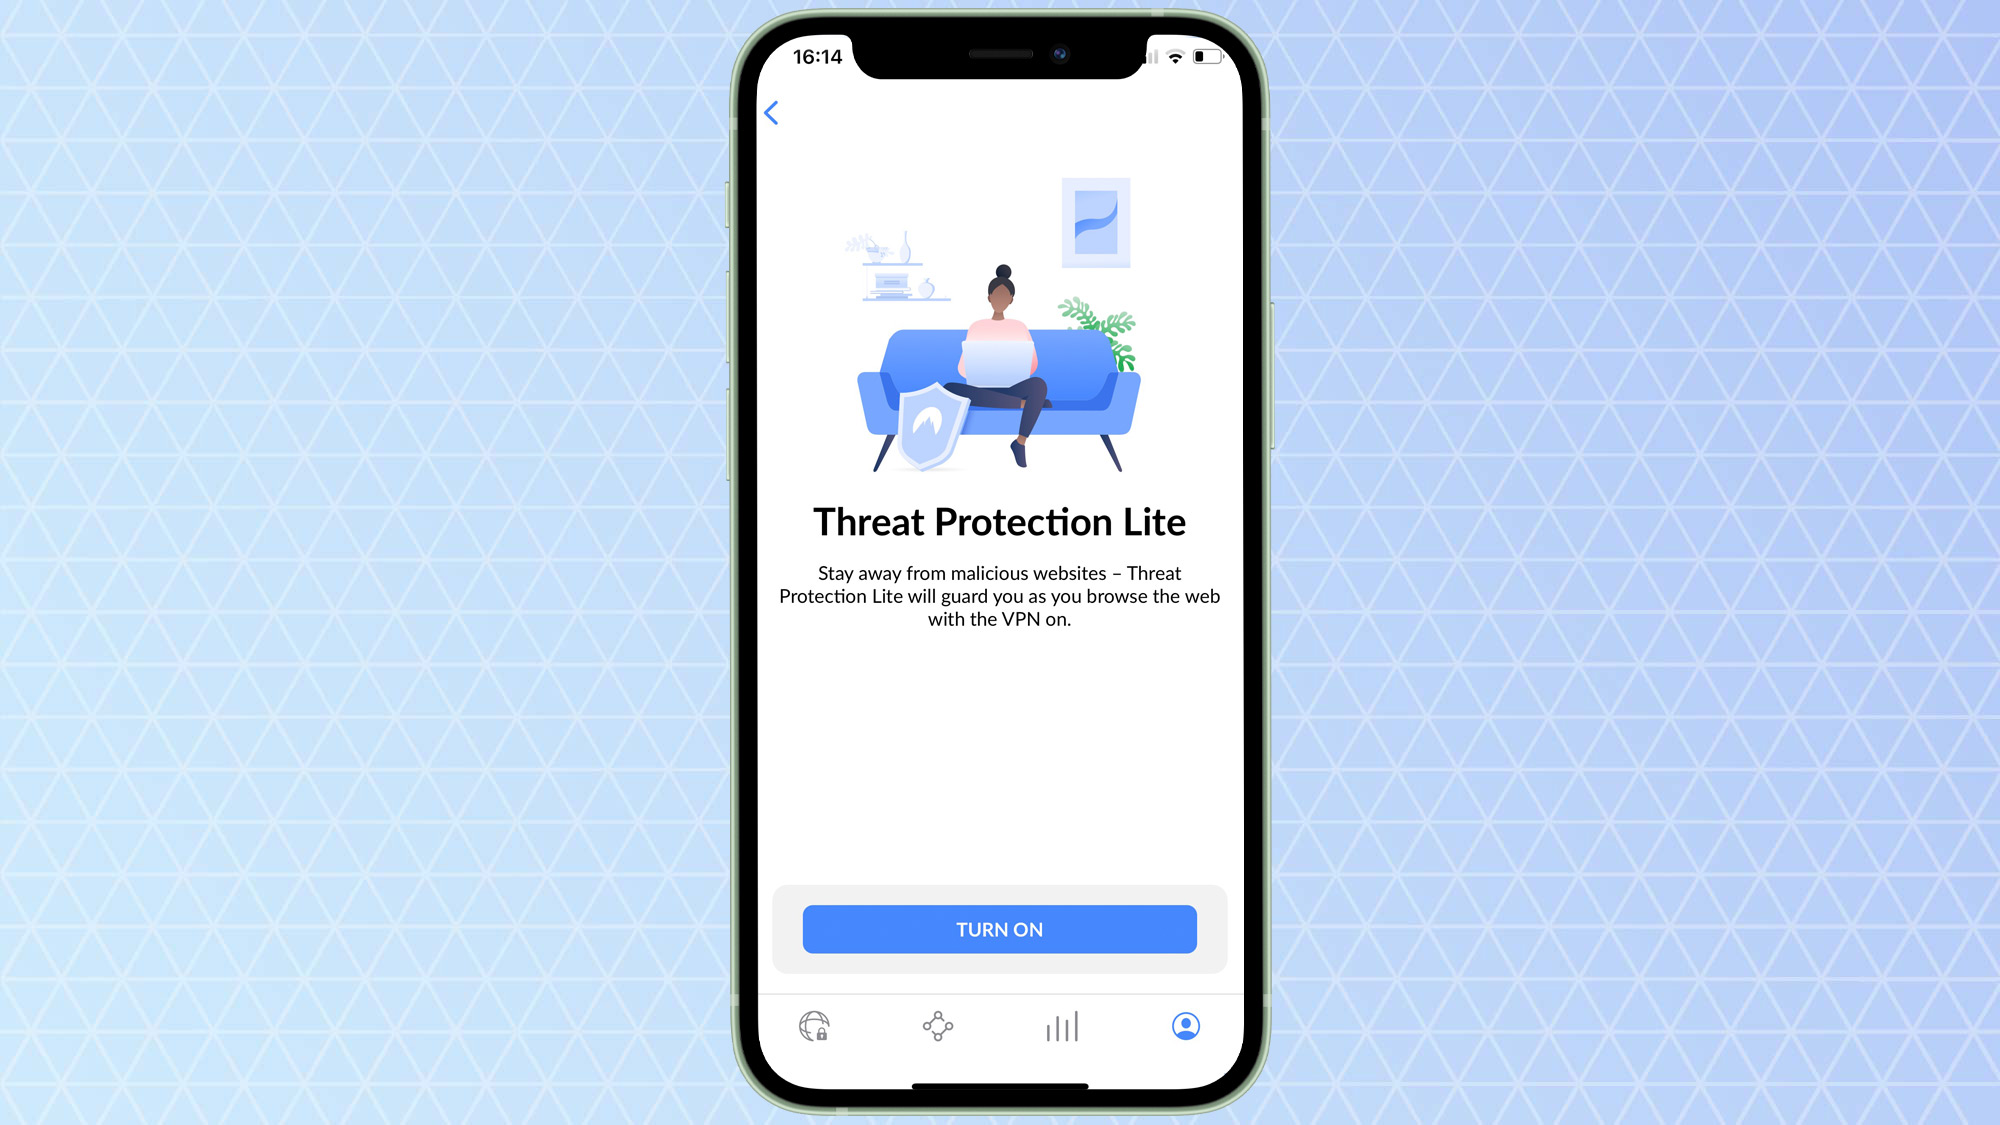 NordVPN Threat Protection on iPhone